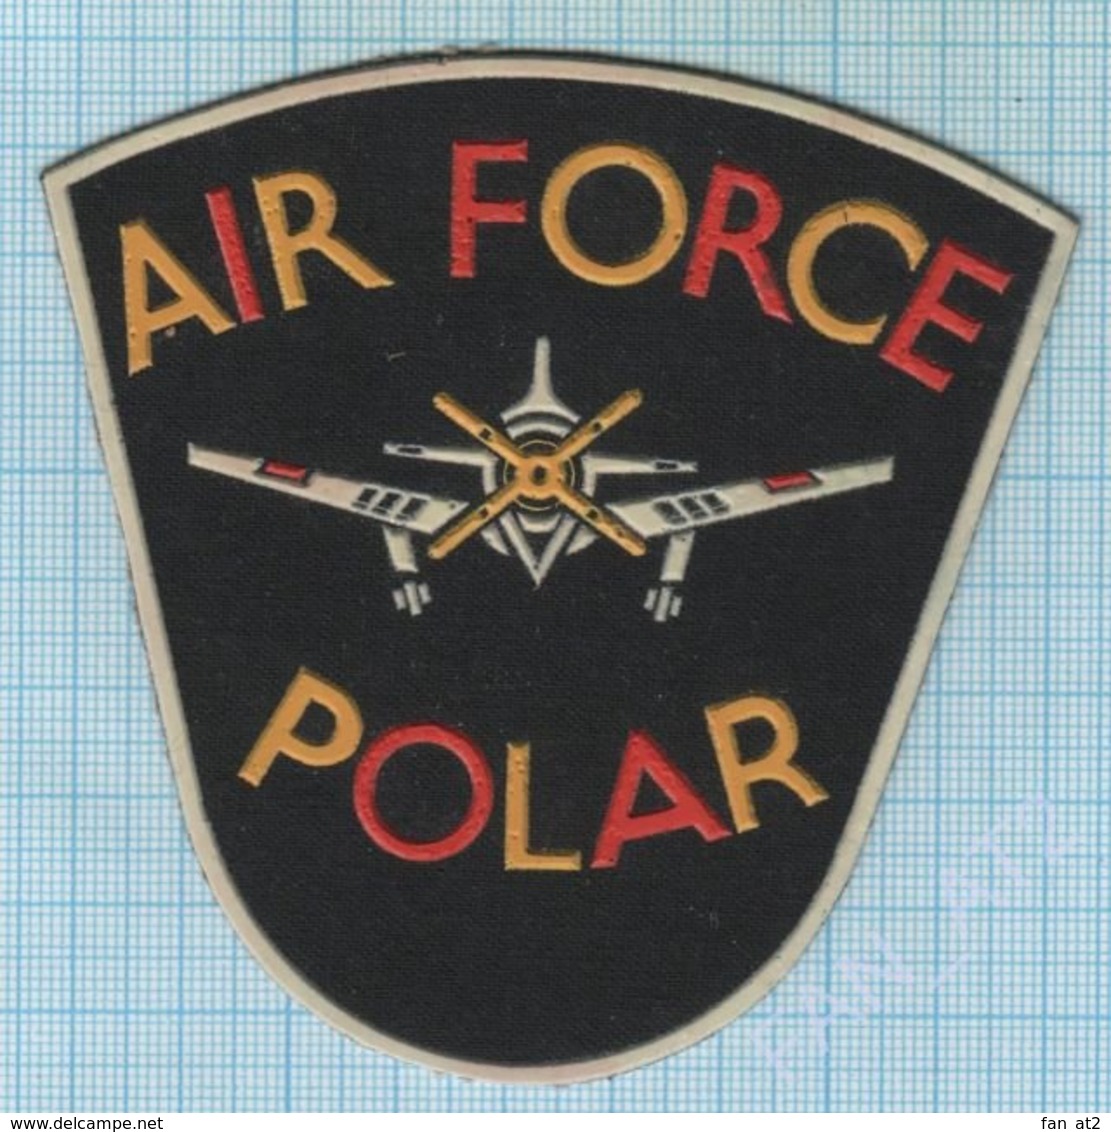 USA / Patch, Abzeichen, Parche, Ecusson / AVIATION / AIR FORCE POLAR / Made In UKRAINE. 1990s - Patches